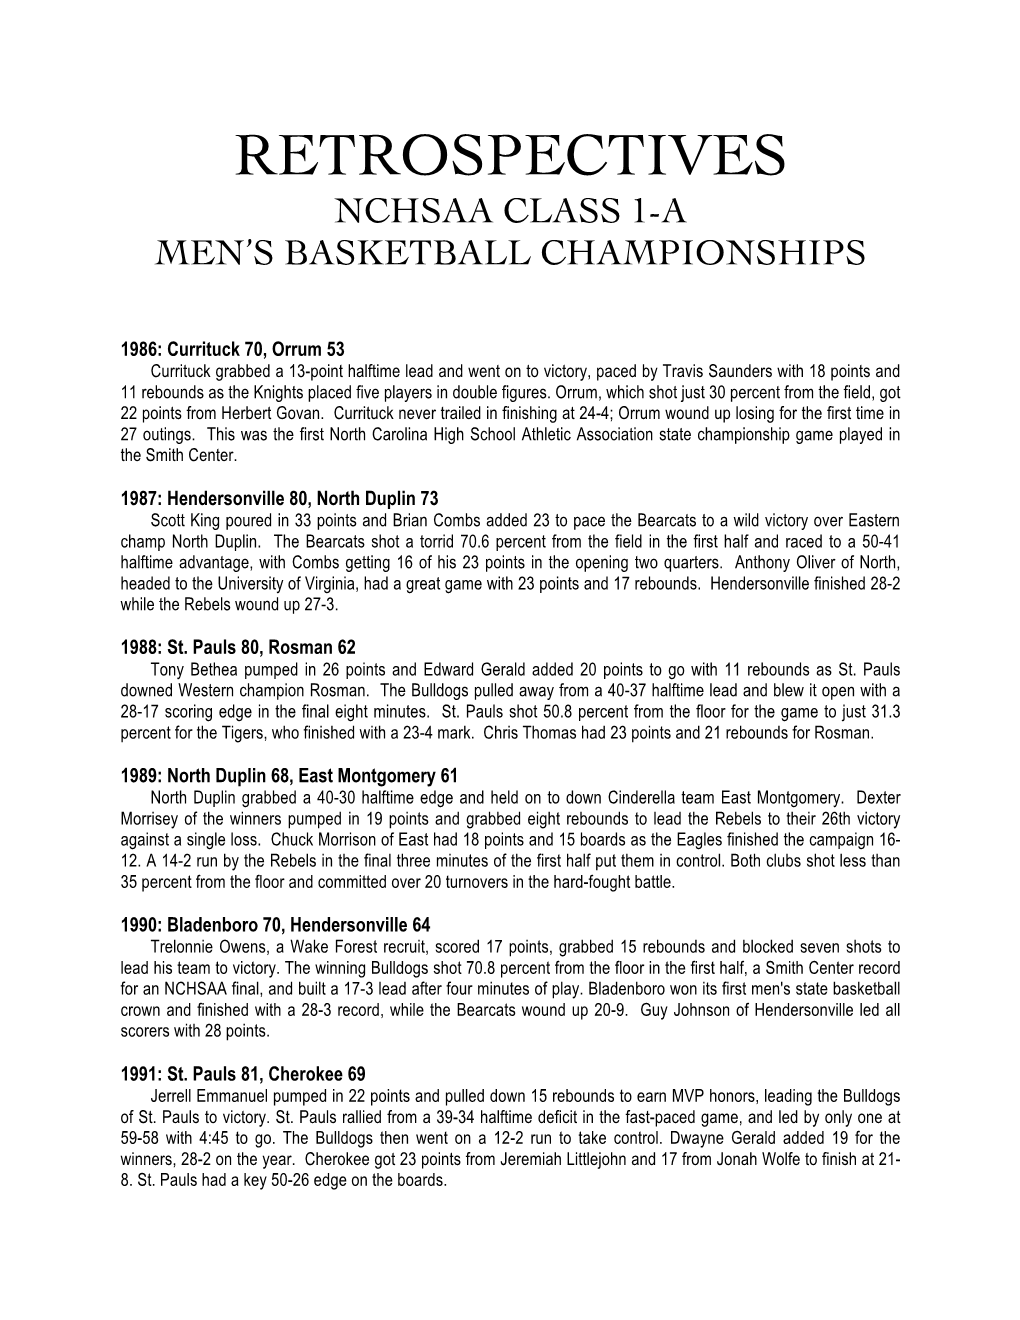 Men's Championship Retrospectives